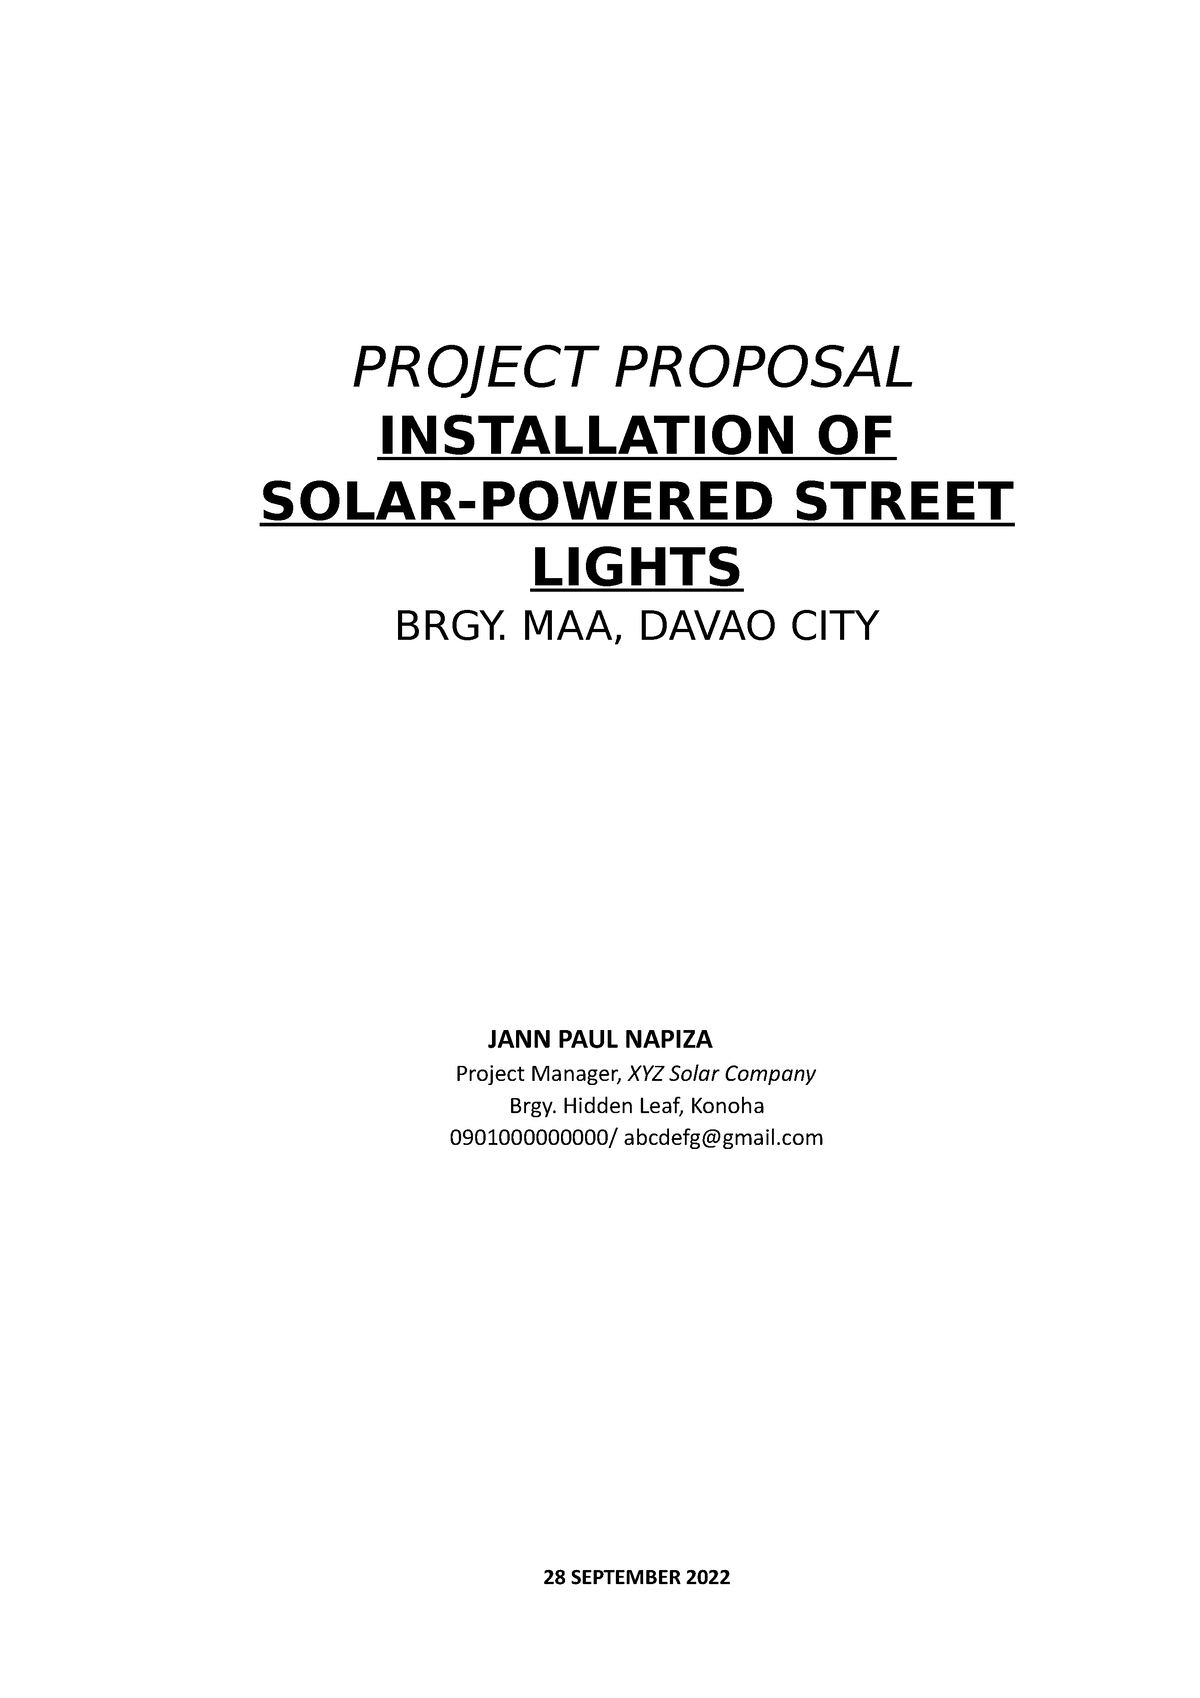 solar street light business plan